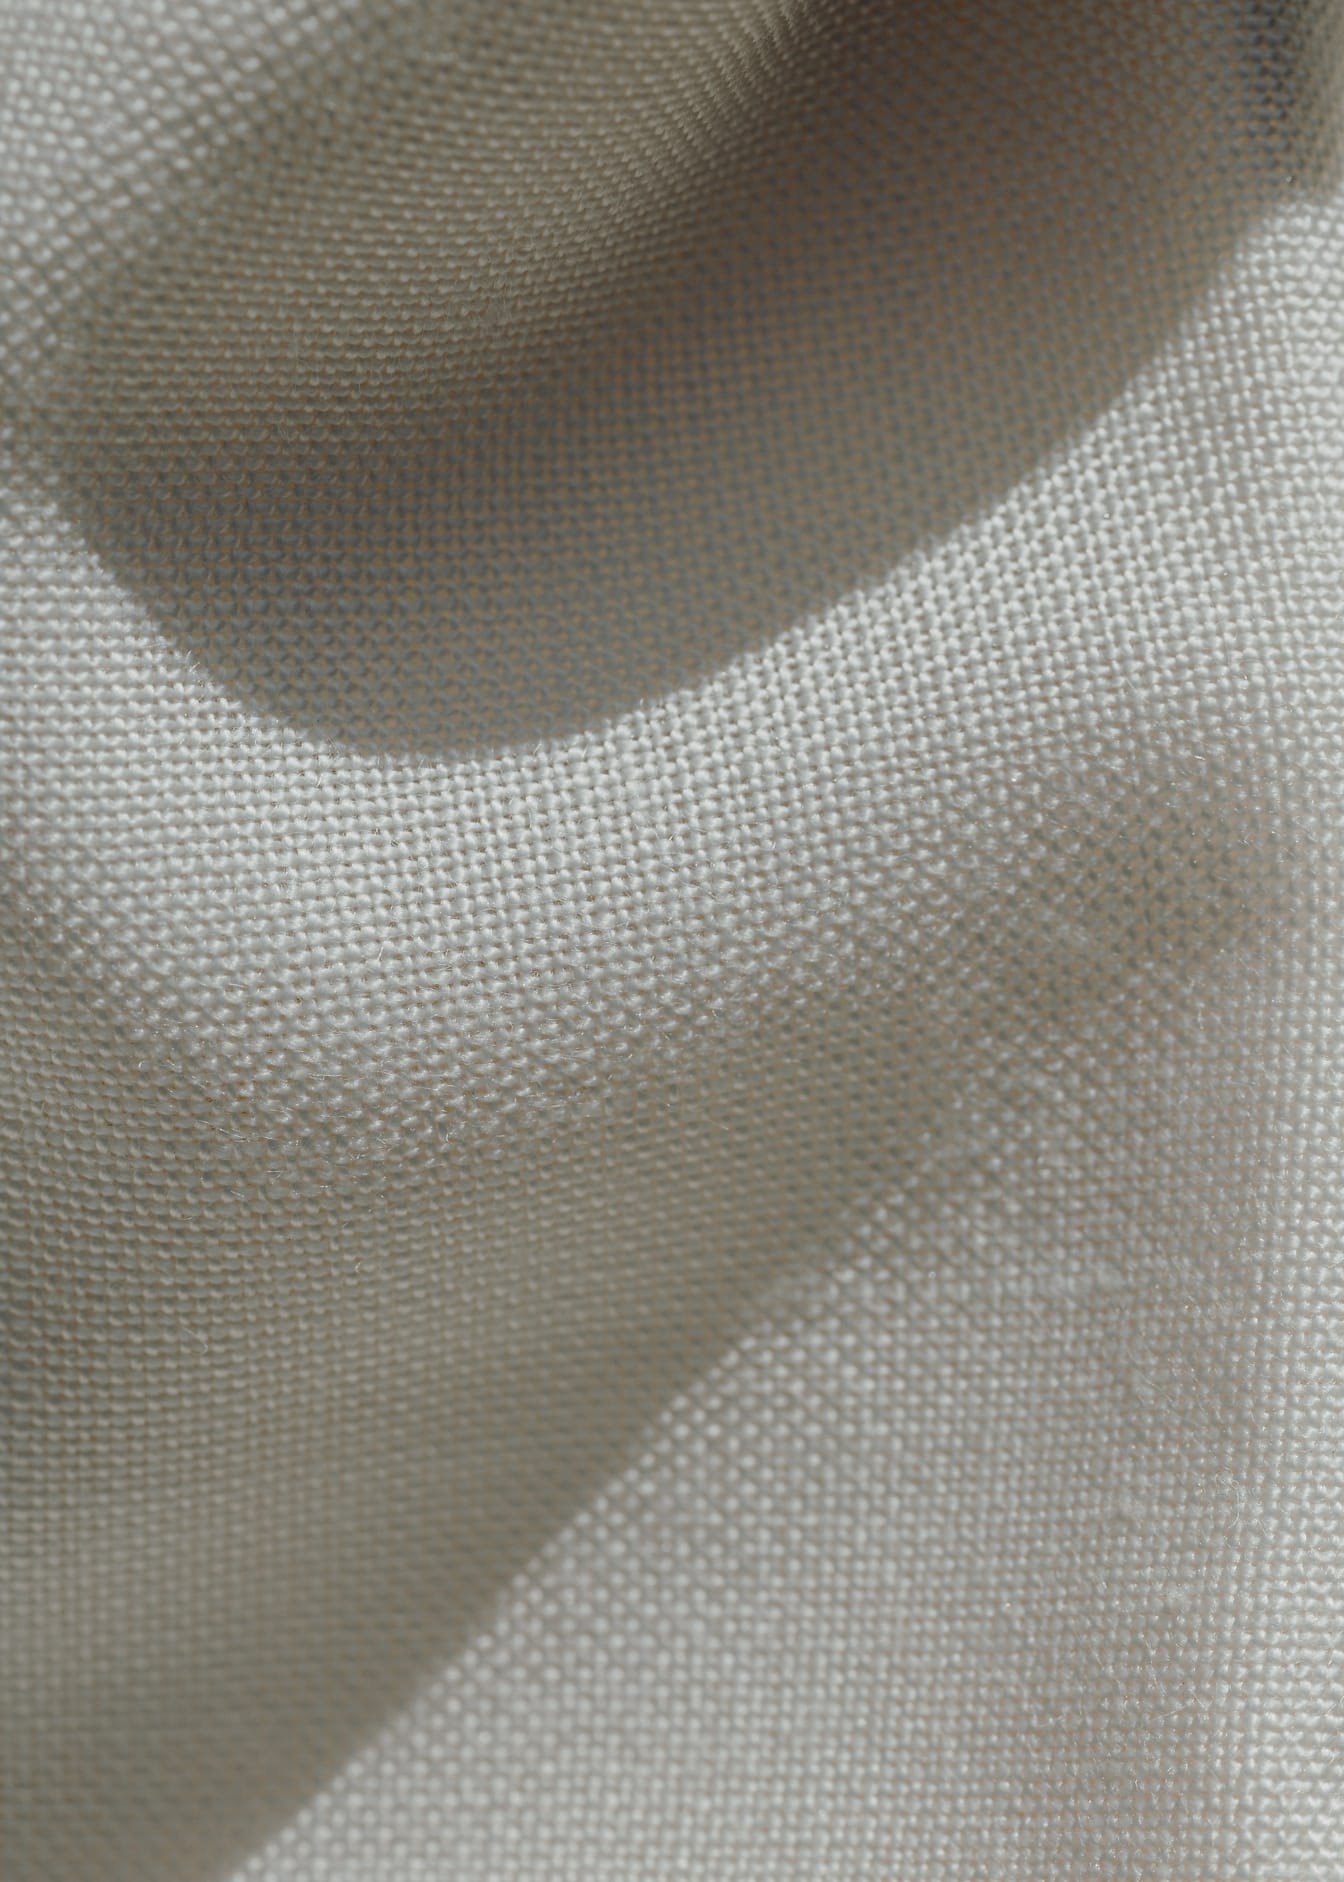 Close-up kain linen putih kusut dengan bayangan di atasnya